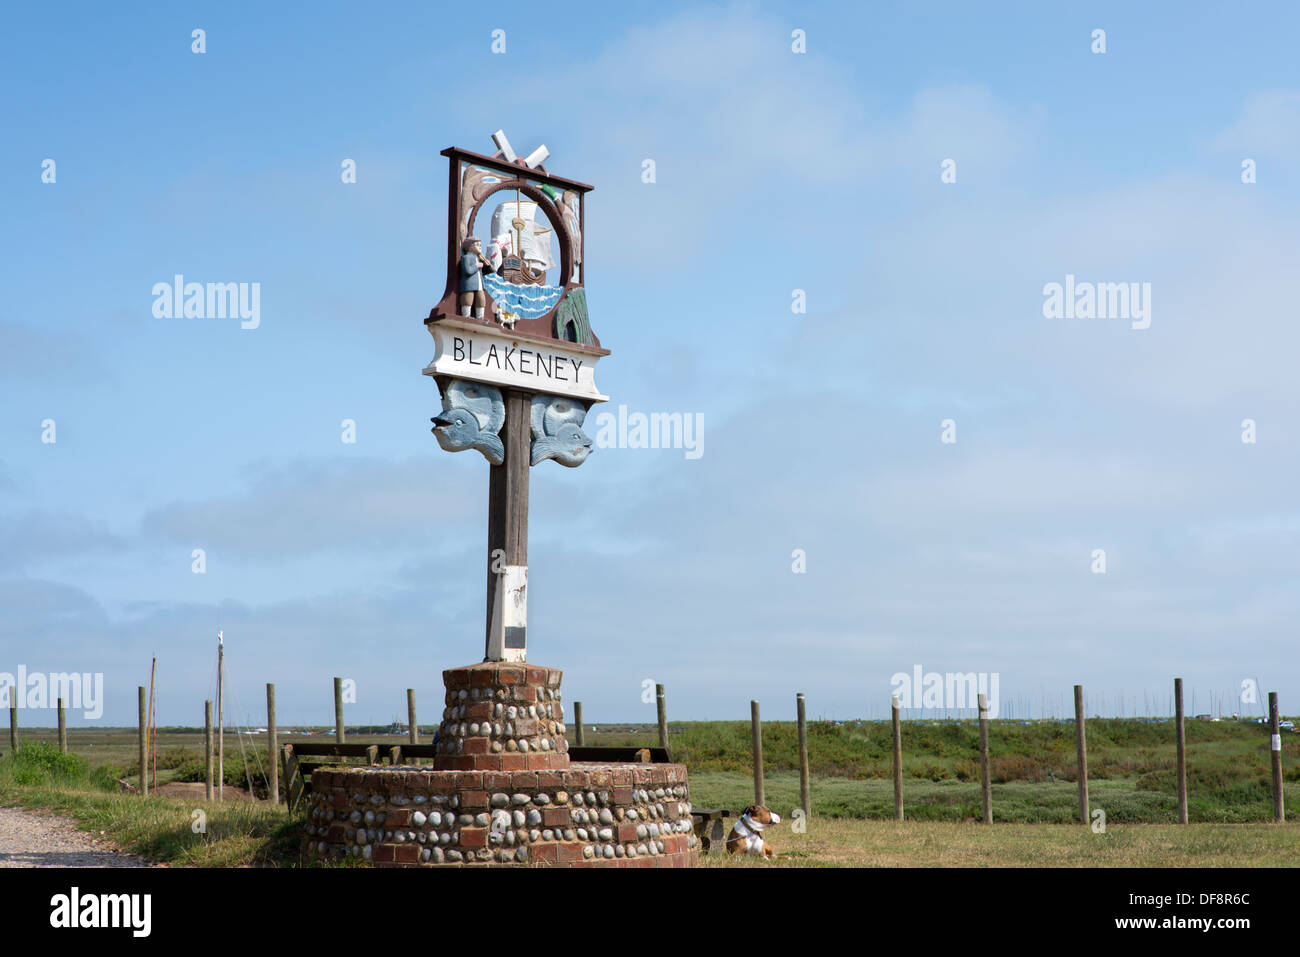 Blakeney village sign, Norfolk, England. Stock Photo